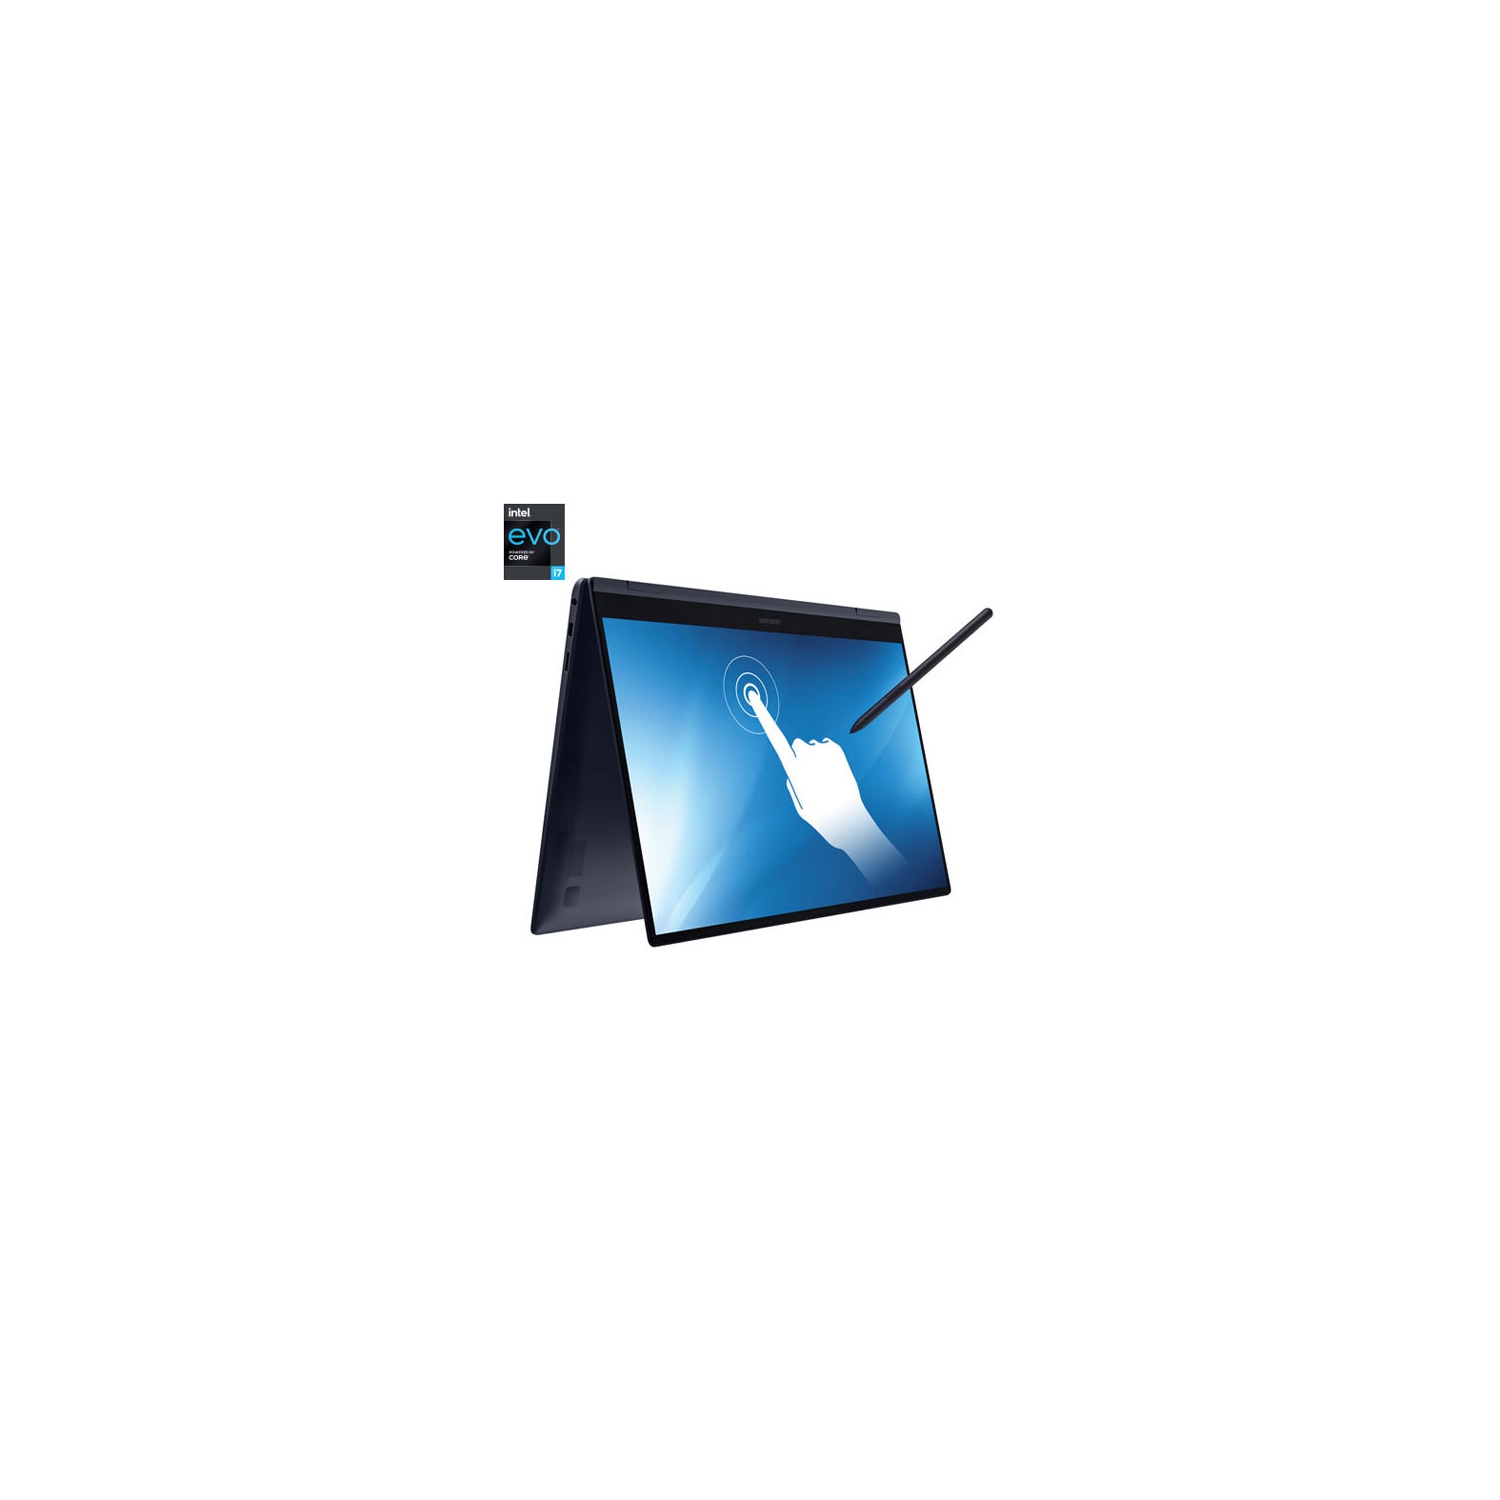 Open Box - Samsung Galaxy Book Pro 360 15.6" Touchscreen 2-in-1 Laptop -Navy (Intel i7-1165G7/512GB SSD/8GB RAM)